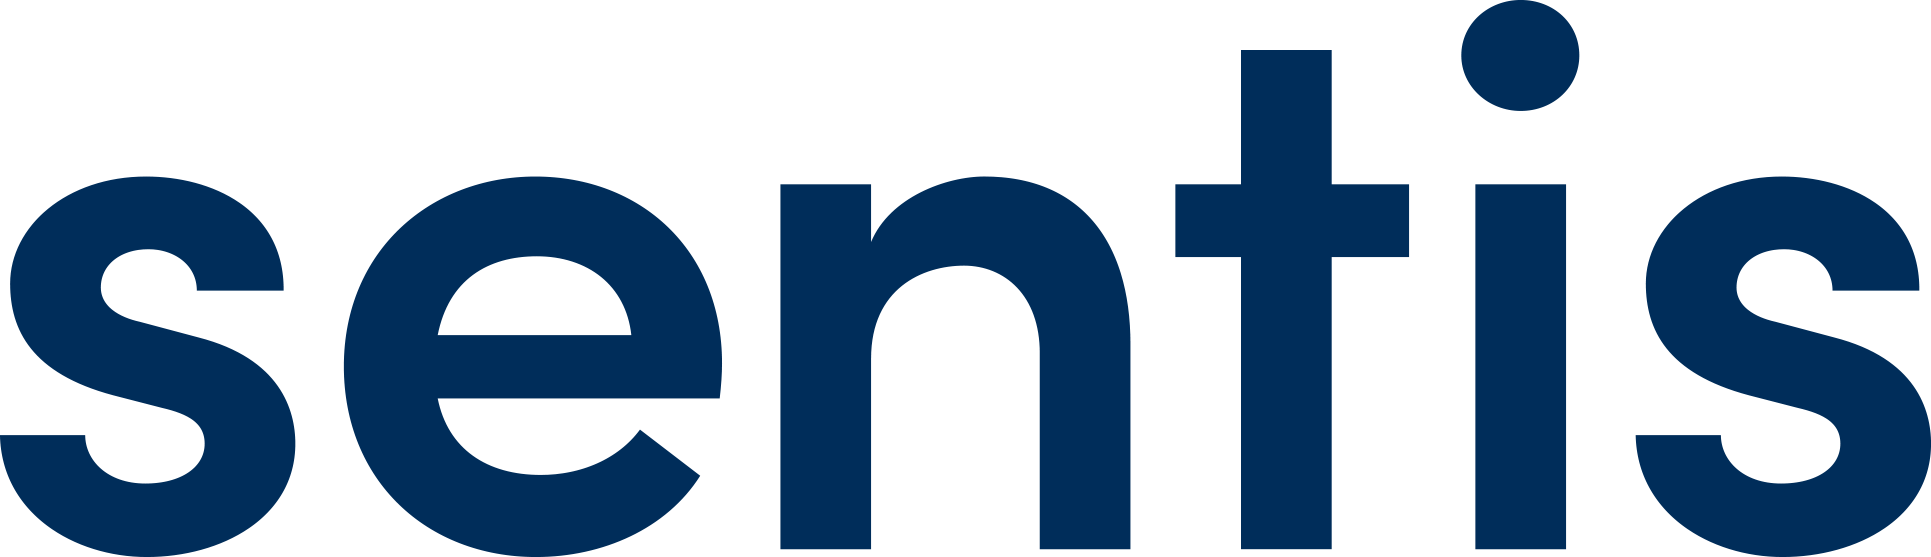 Sentis_Logo_RGB_Ink_Oct2019